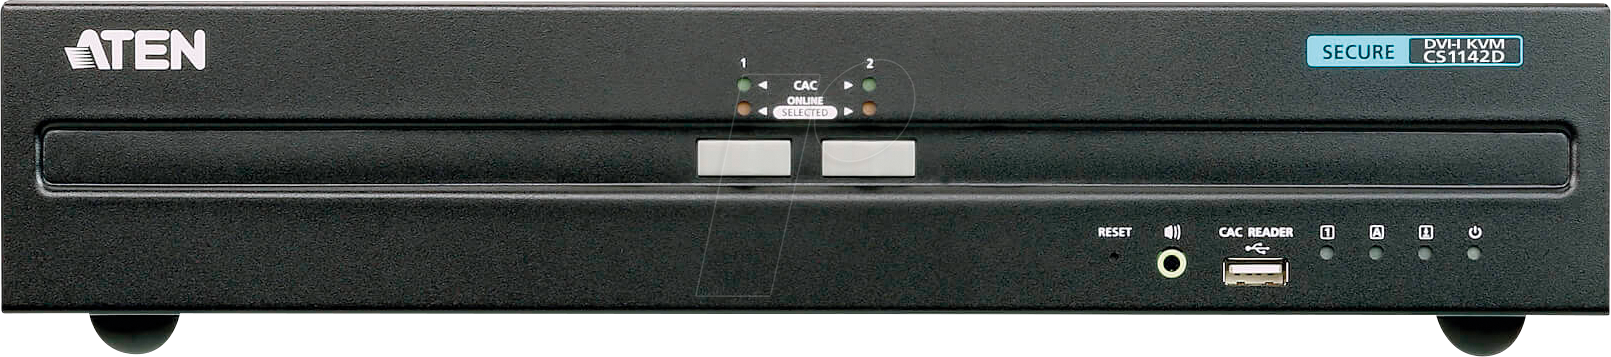 ATEN CS1142D - 2-Port Sicherheits KVM Switch, DVI, USB, PS/2, Audio von Aten